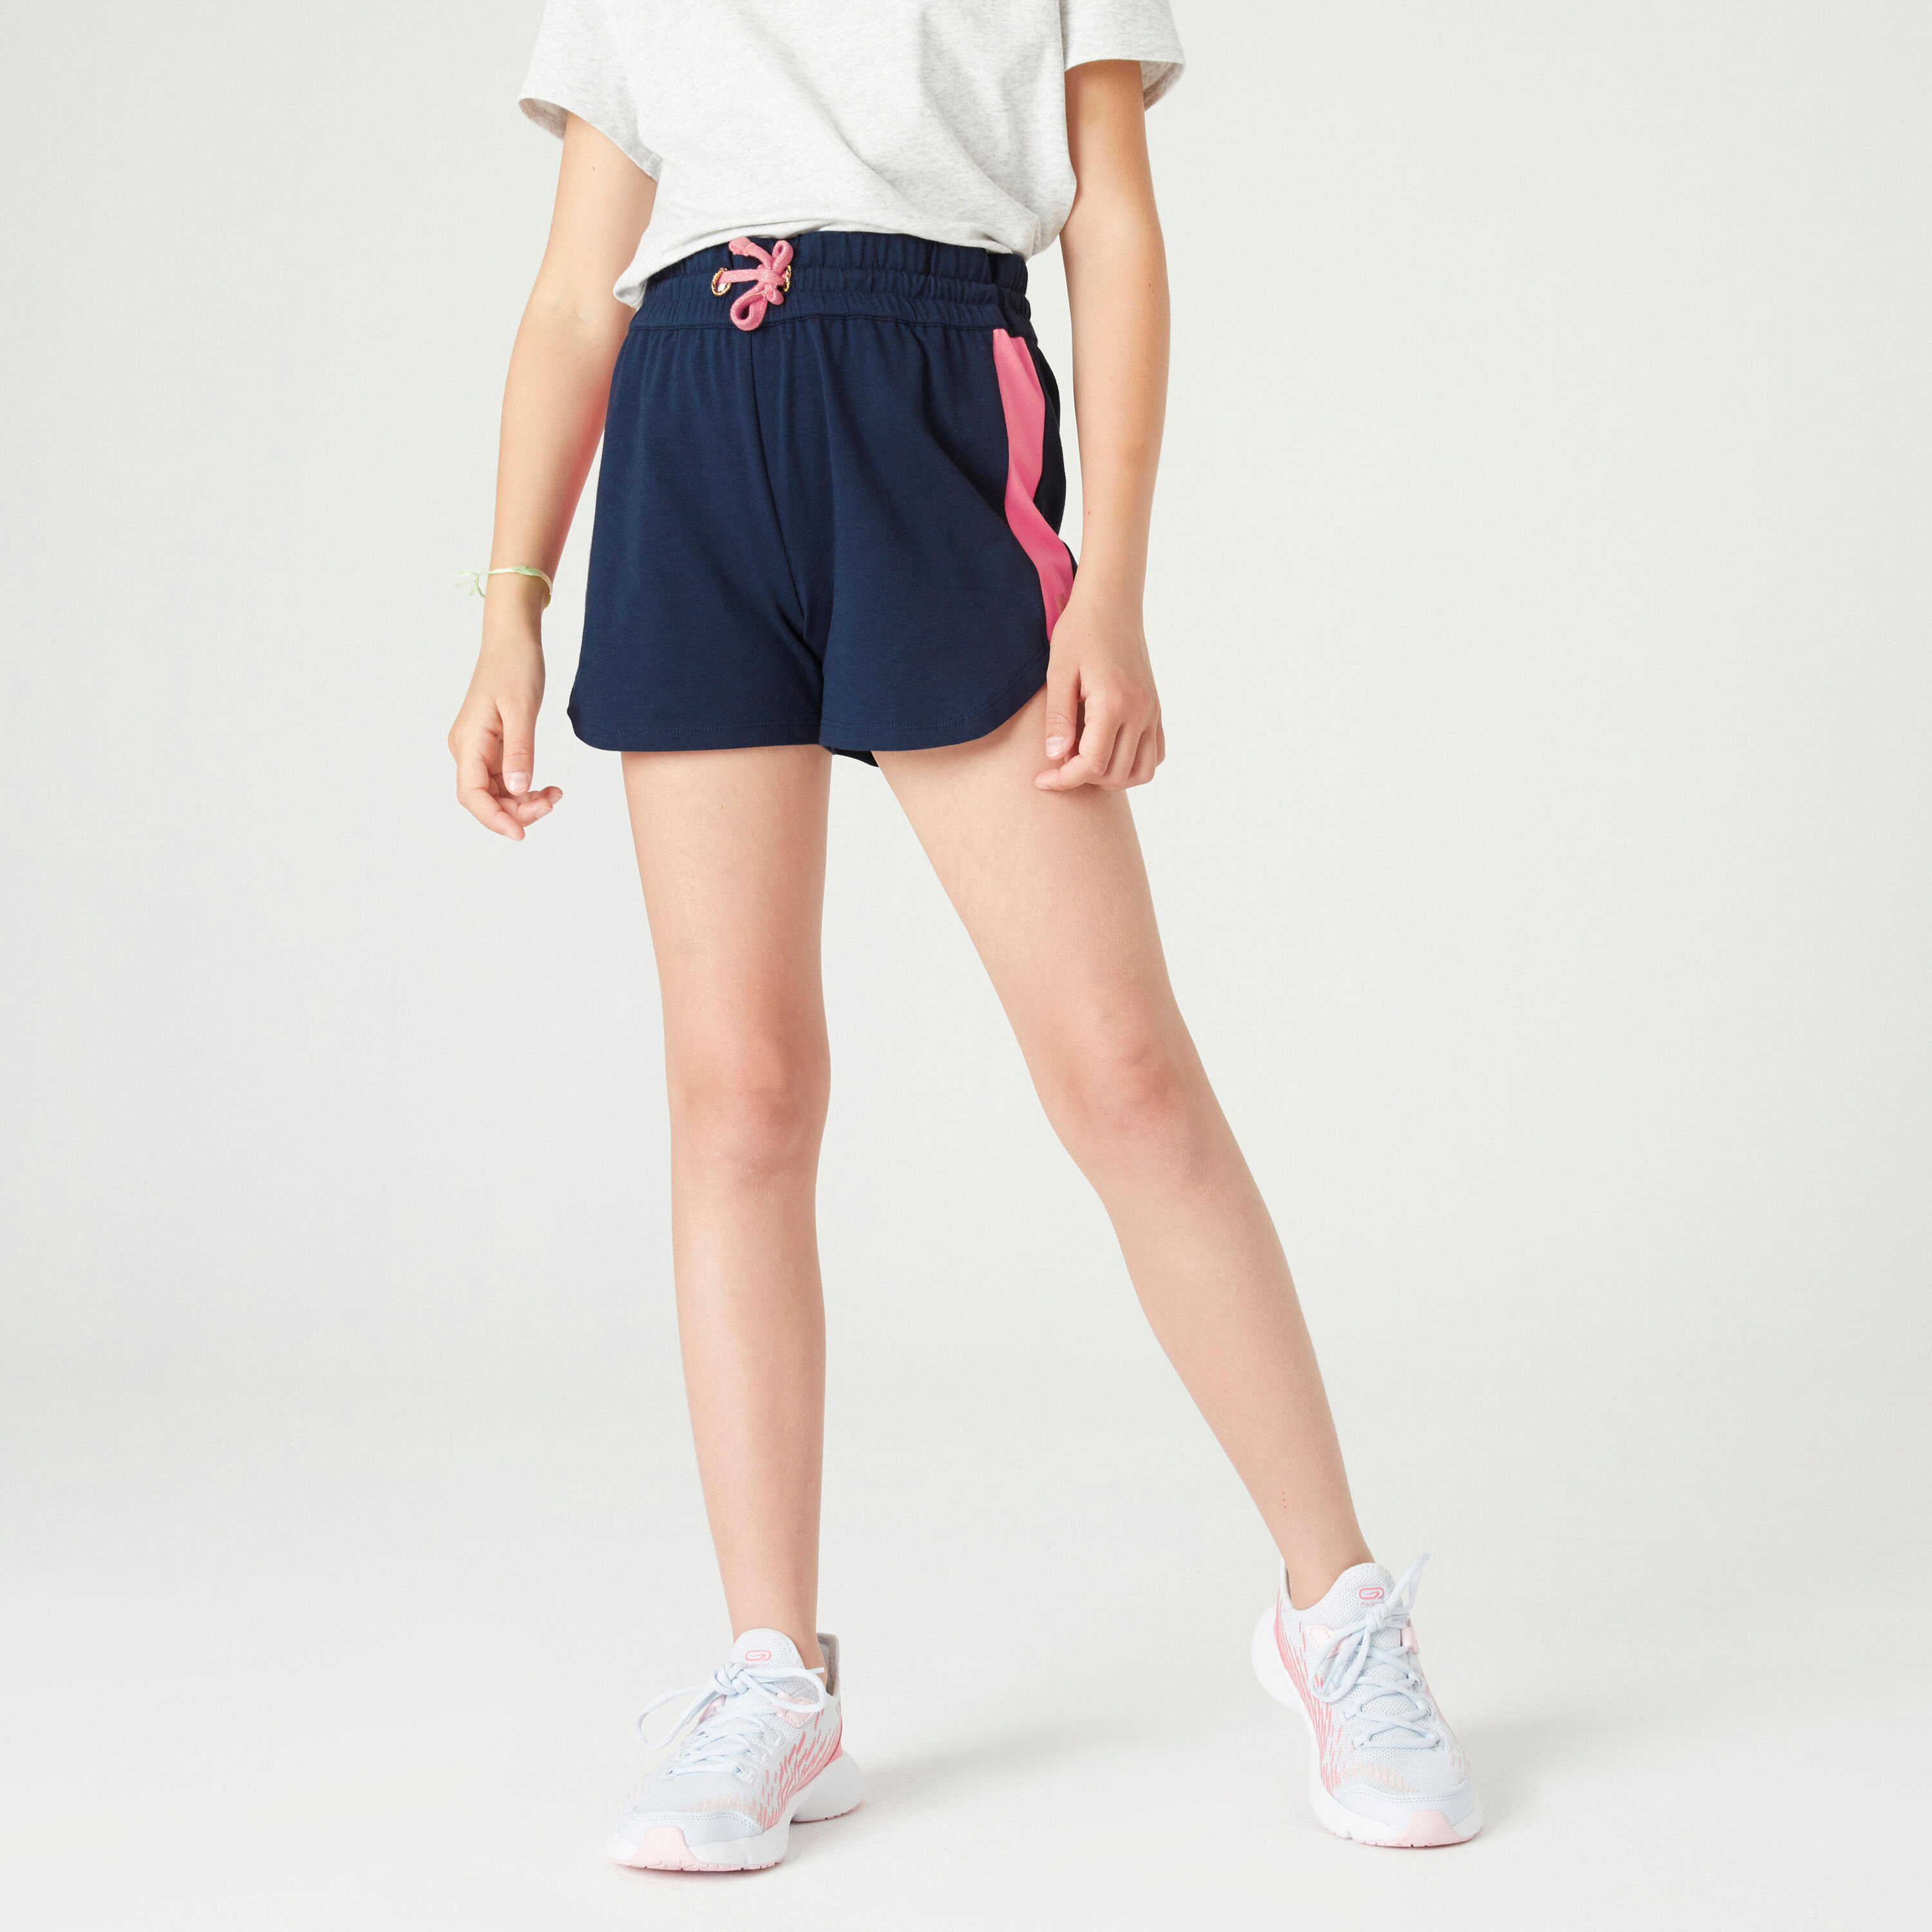 DOMYOS Girls' Cotton Shorts - Navy